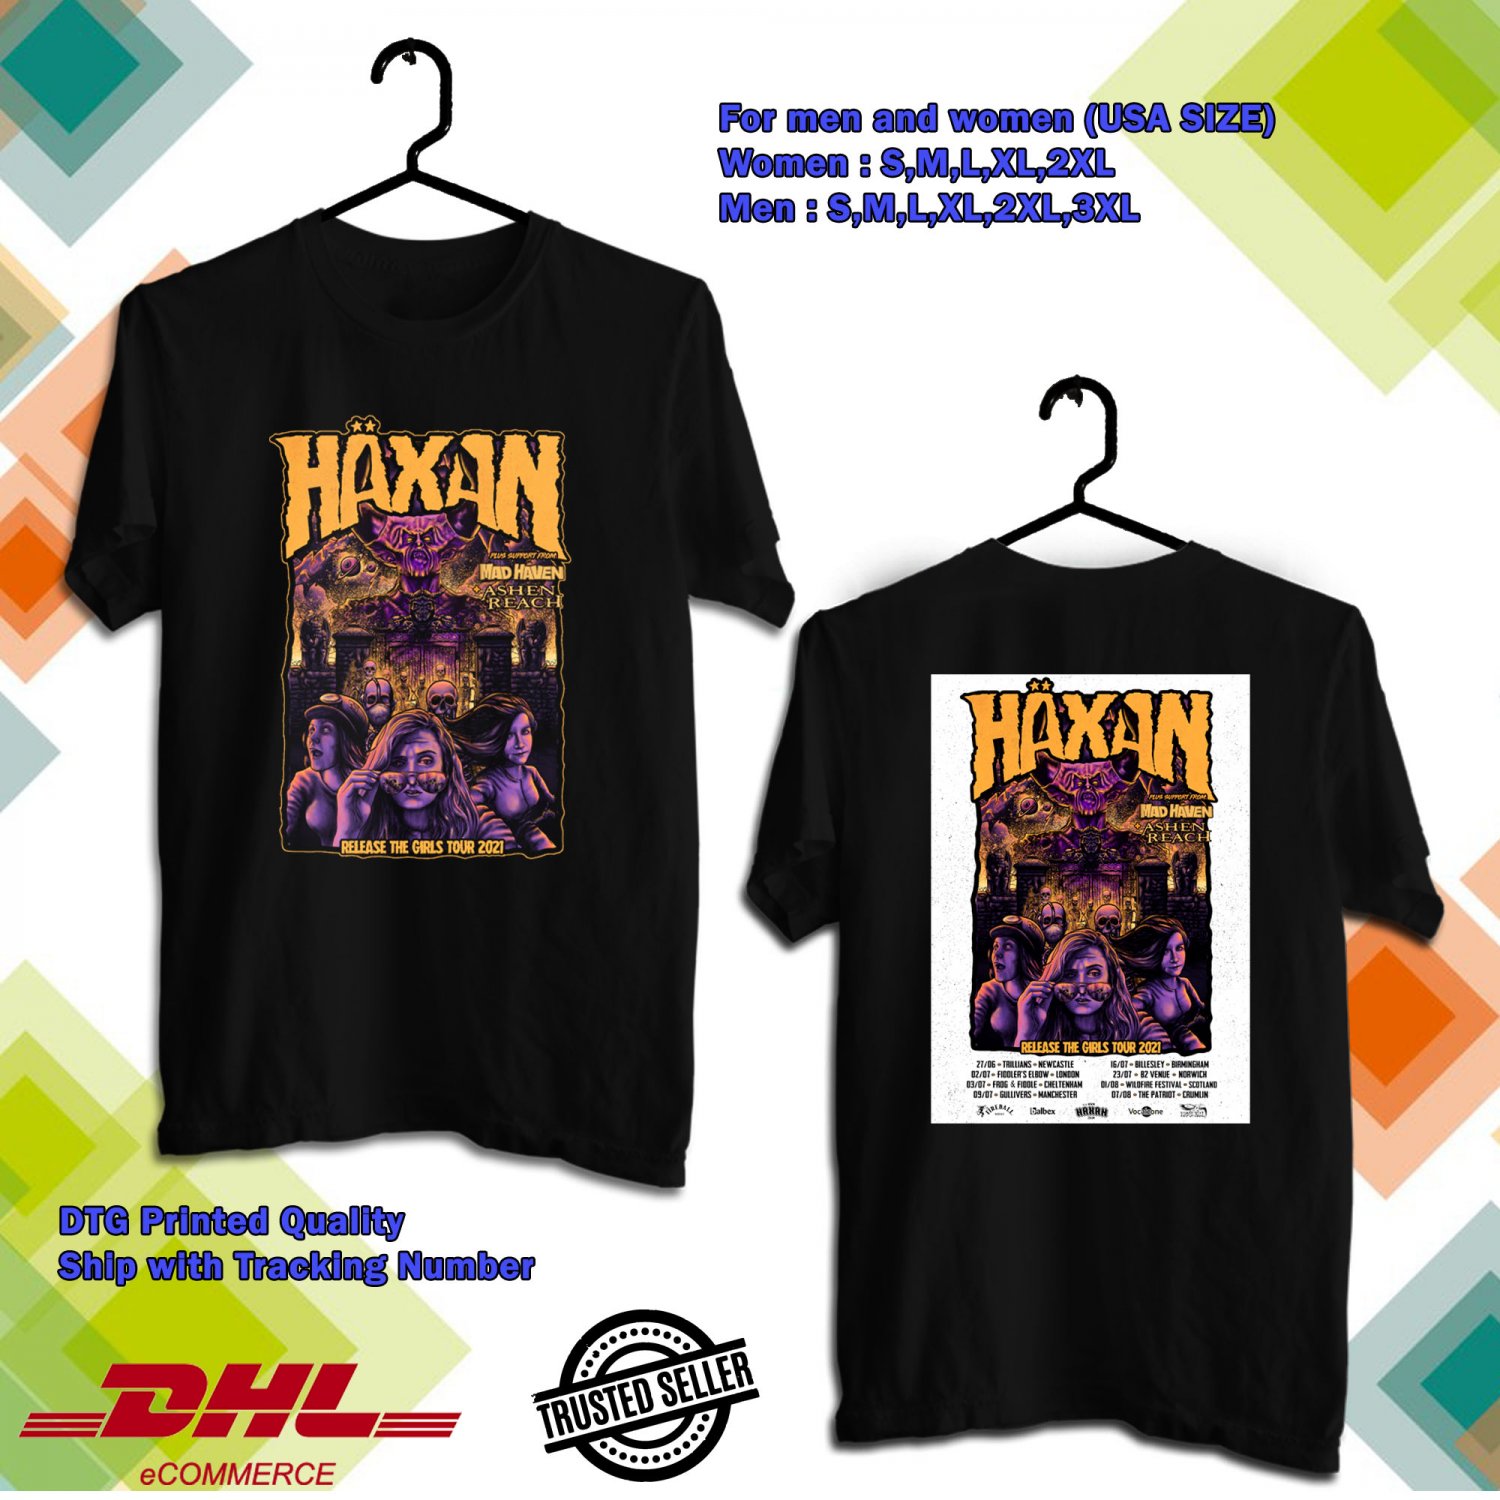 HAXAN BAND RELEASE THE GIRLS U.KINGDOM TOUR 2021 BLACK TEE WITH DATES DM01